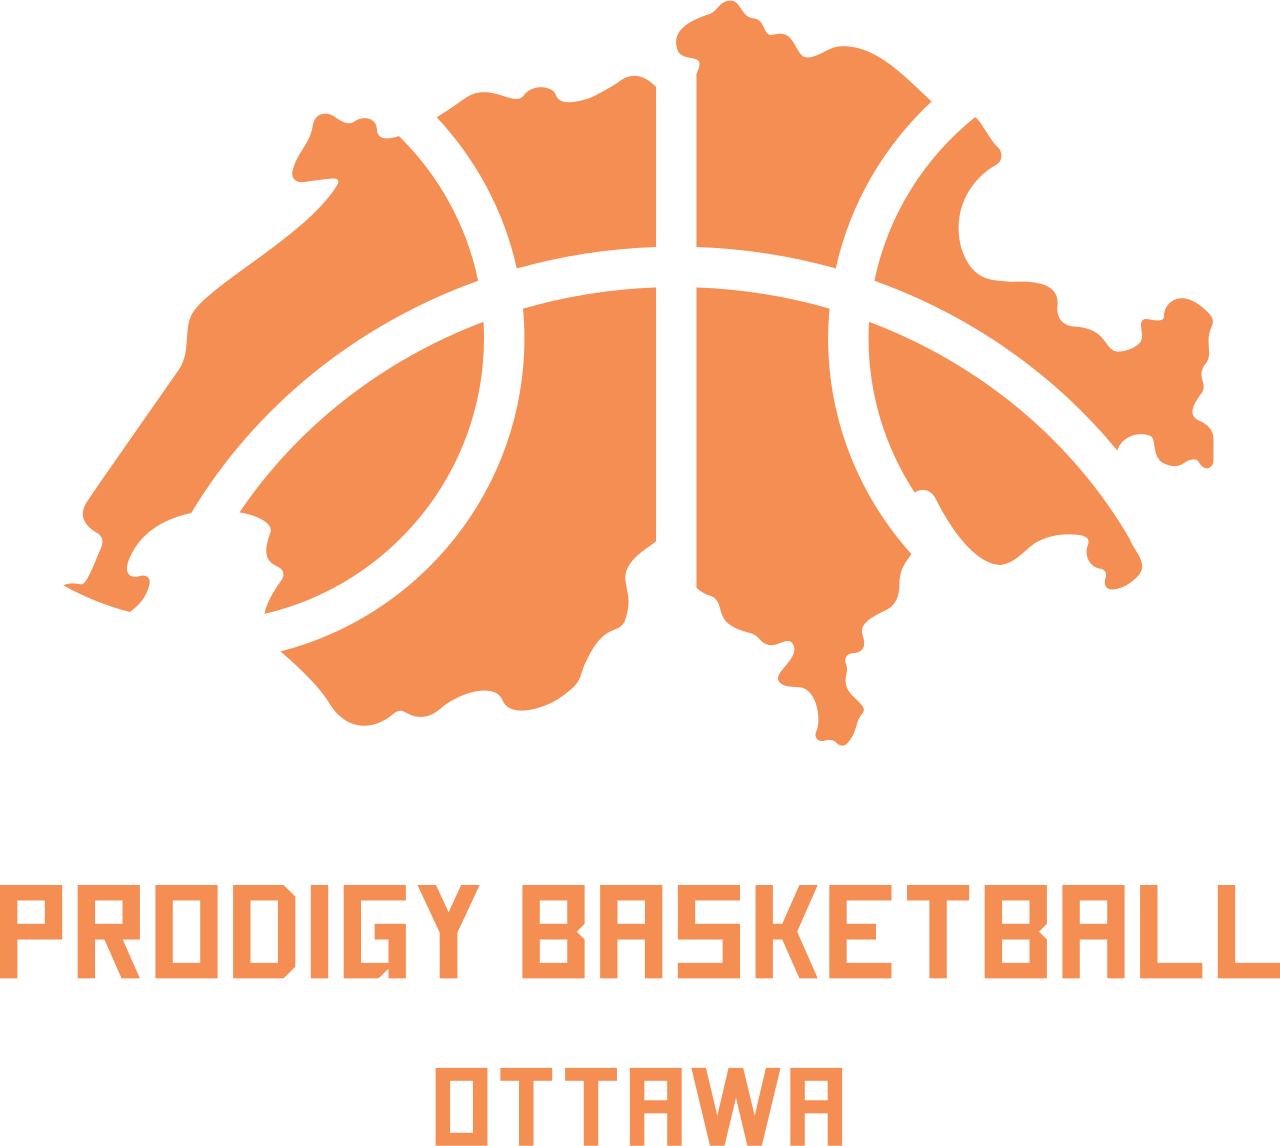 Prodigy Basketball's logo